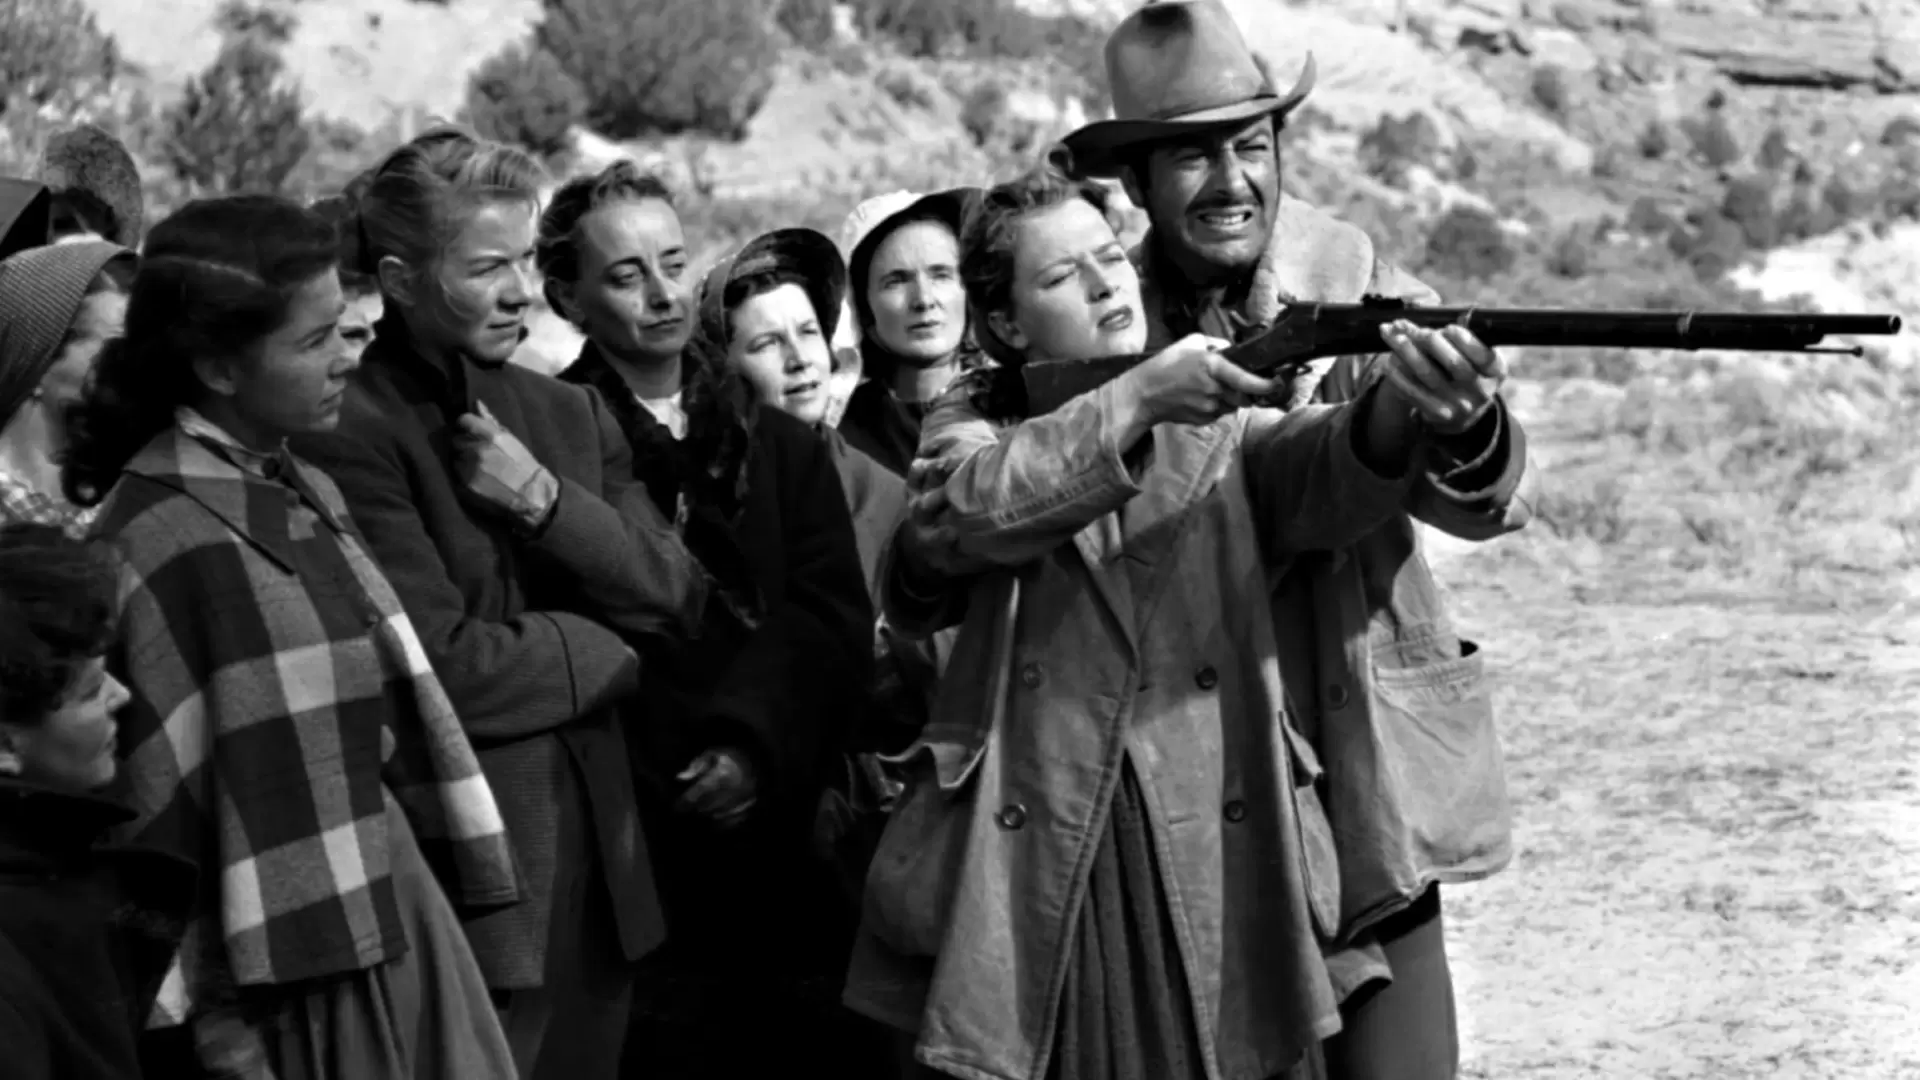 دانلود فیلم Westward the Women 1951